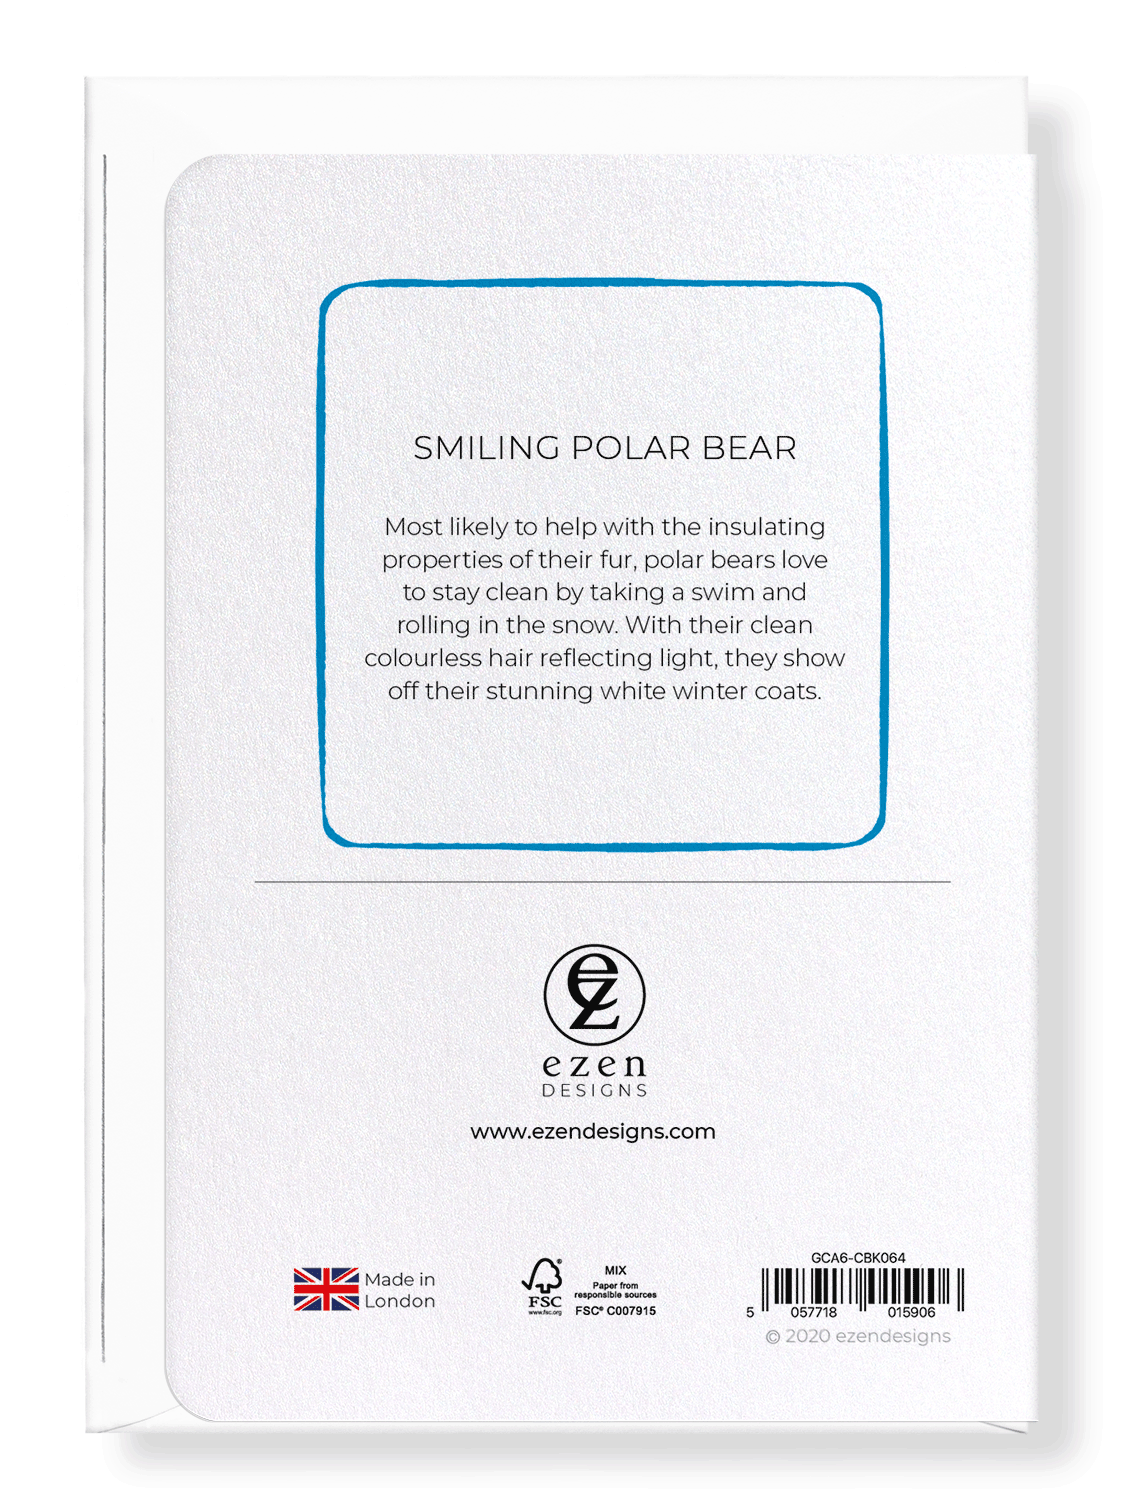 Ezen Designs - Smiling polar bear - Greeting Card - Back